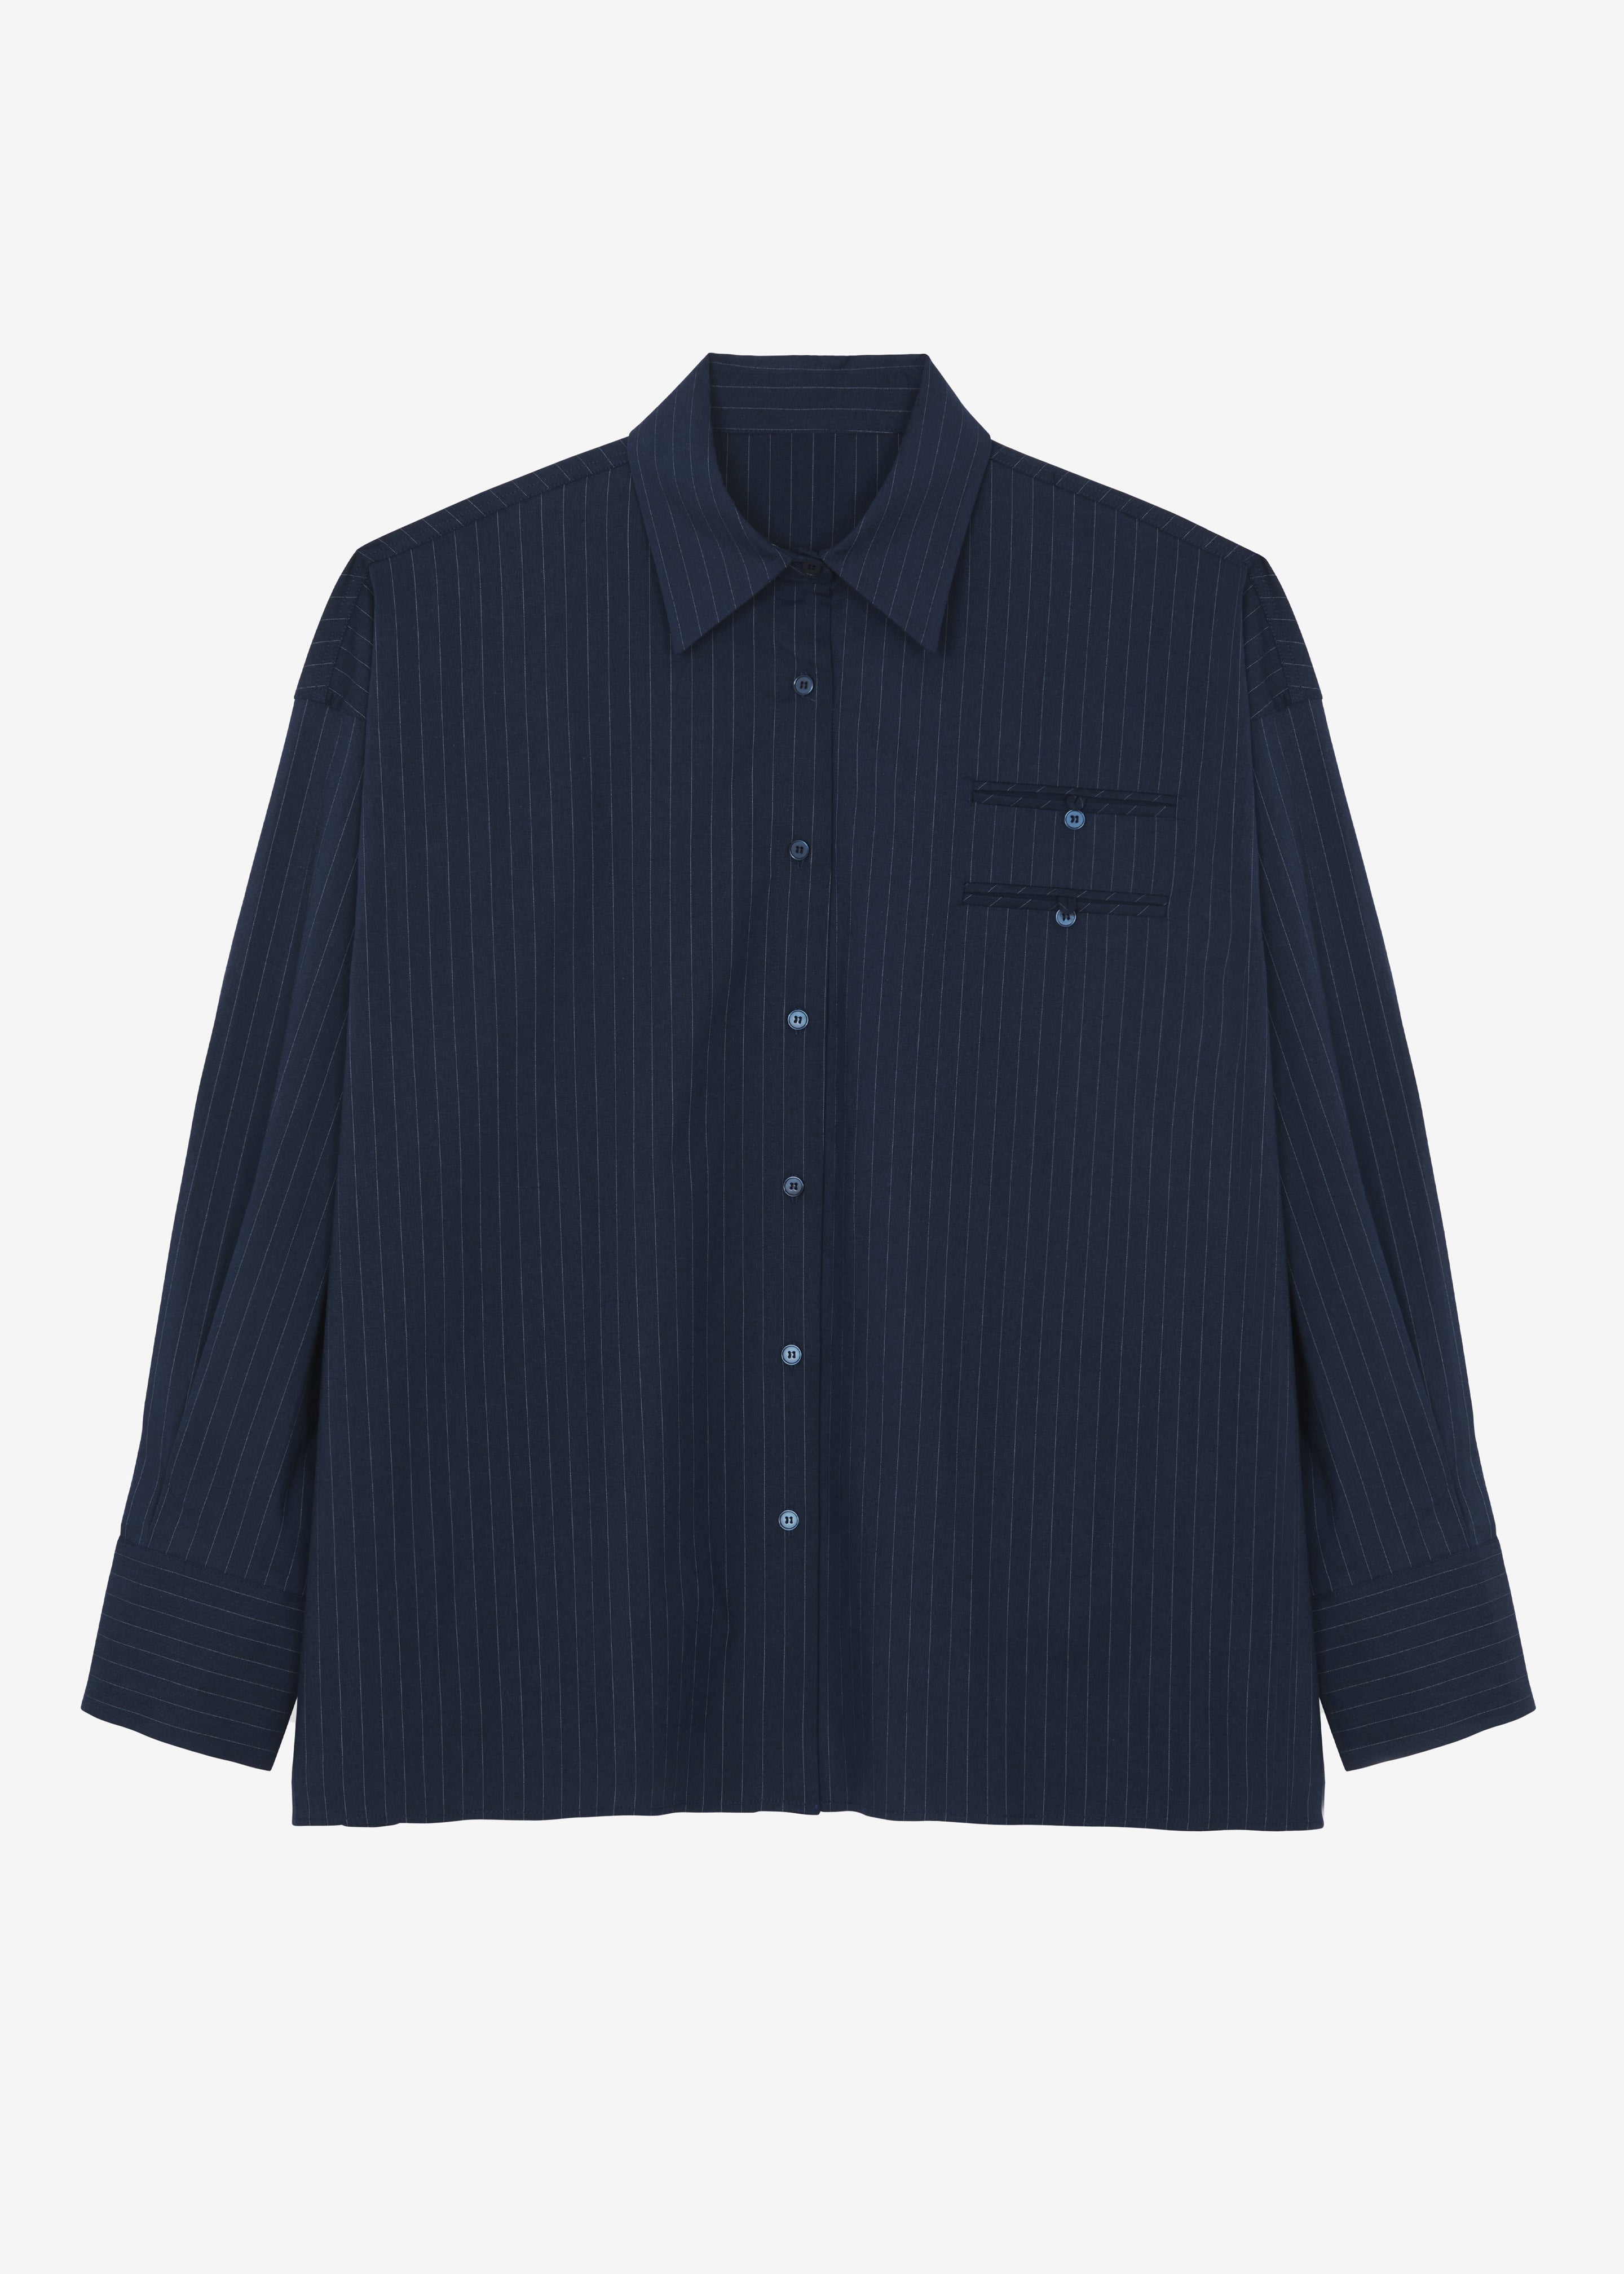 Conrad Button Up Shirt - Navy Pinstripe - 11